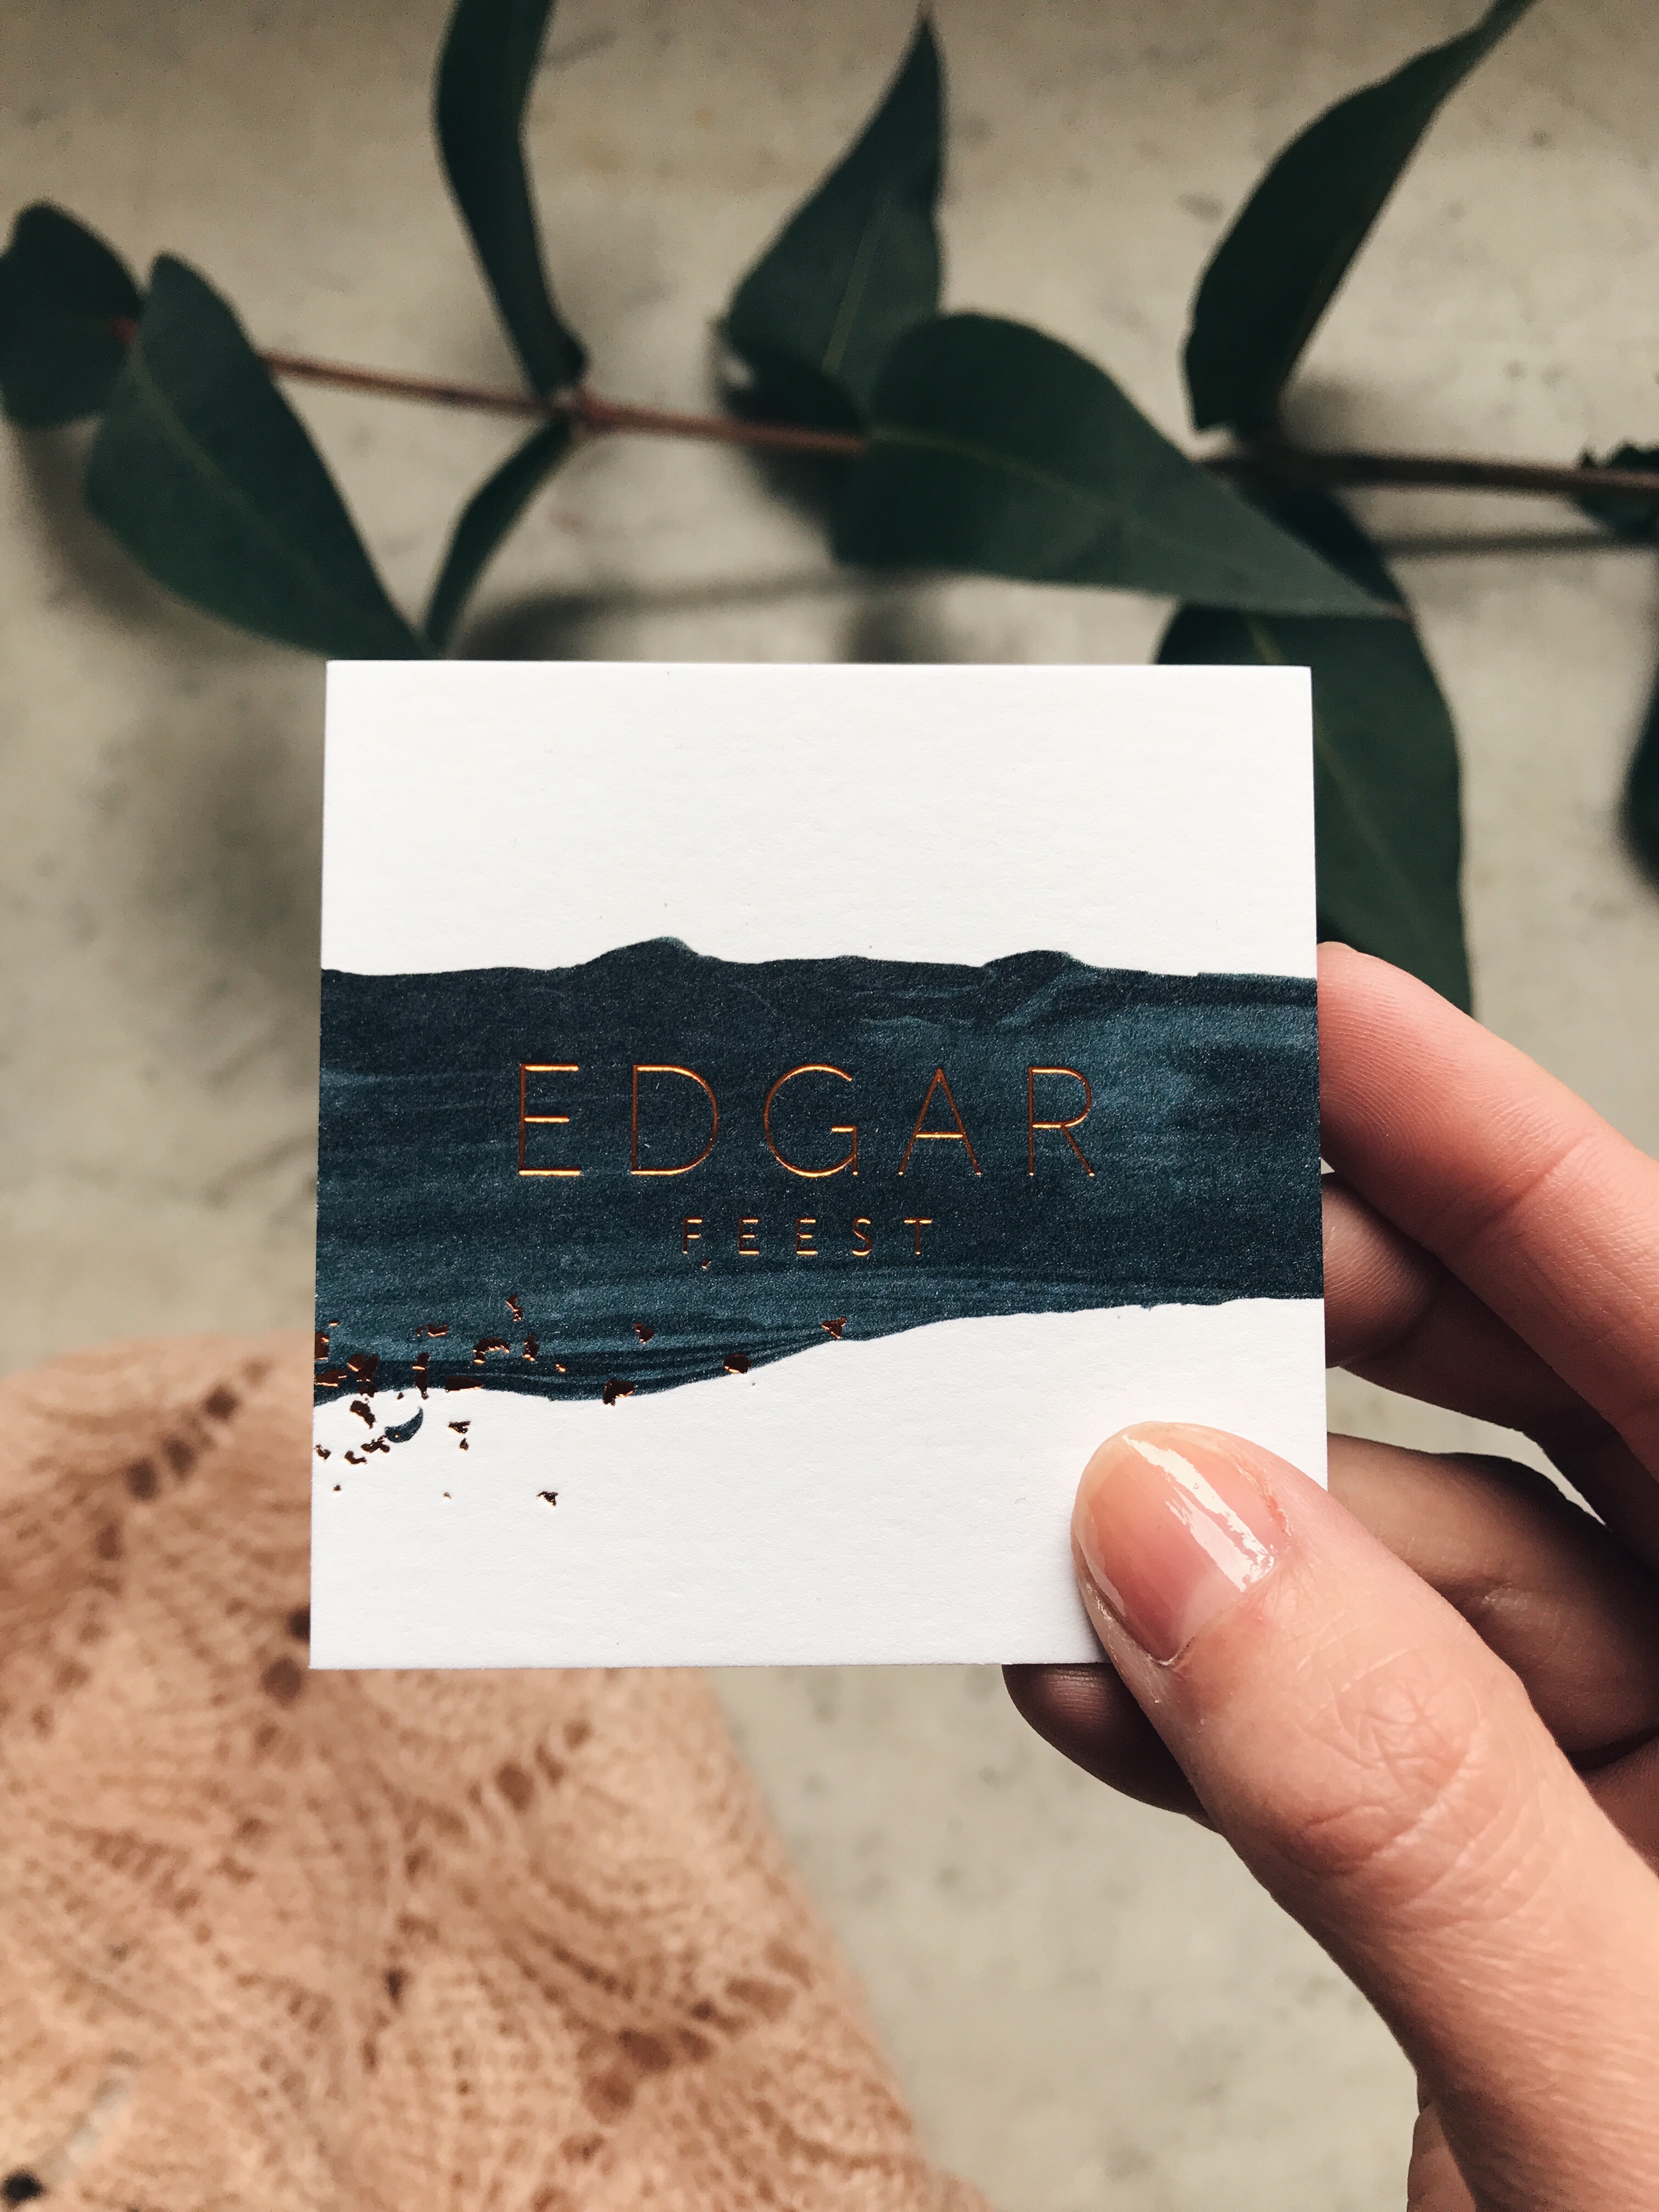 Edgar geboortkaartje letterpress koperfolie donkergroen koper verf kunst